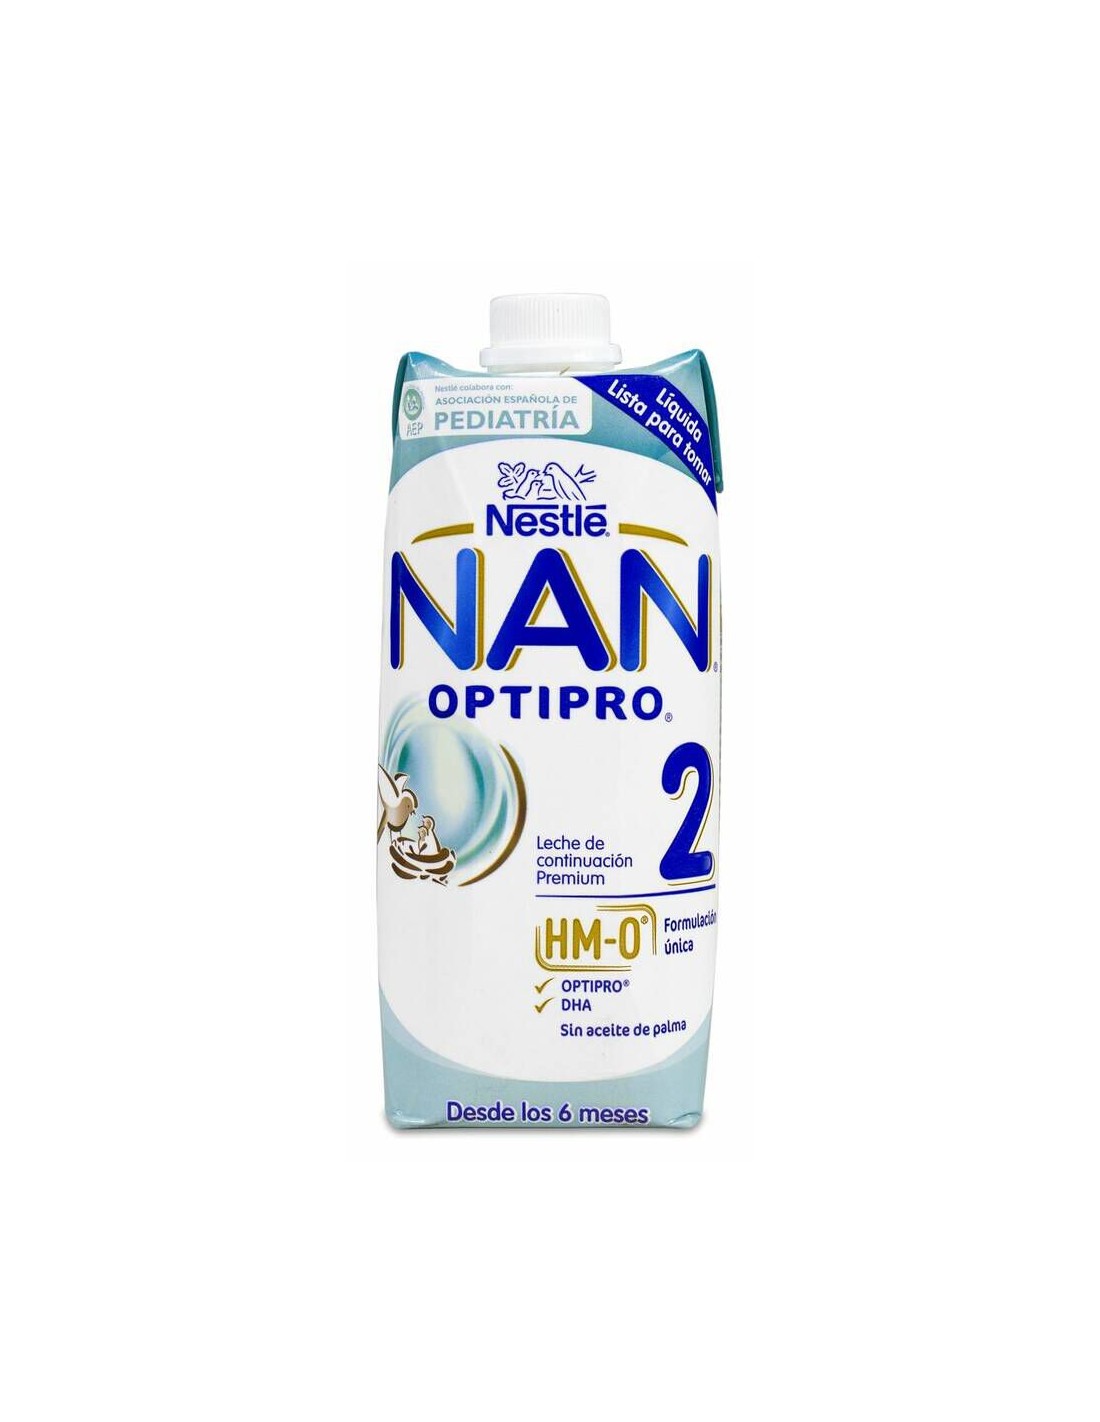 Nidina 2 optipro leche líquida 6 meses + 500 ml